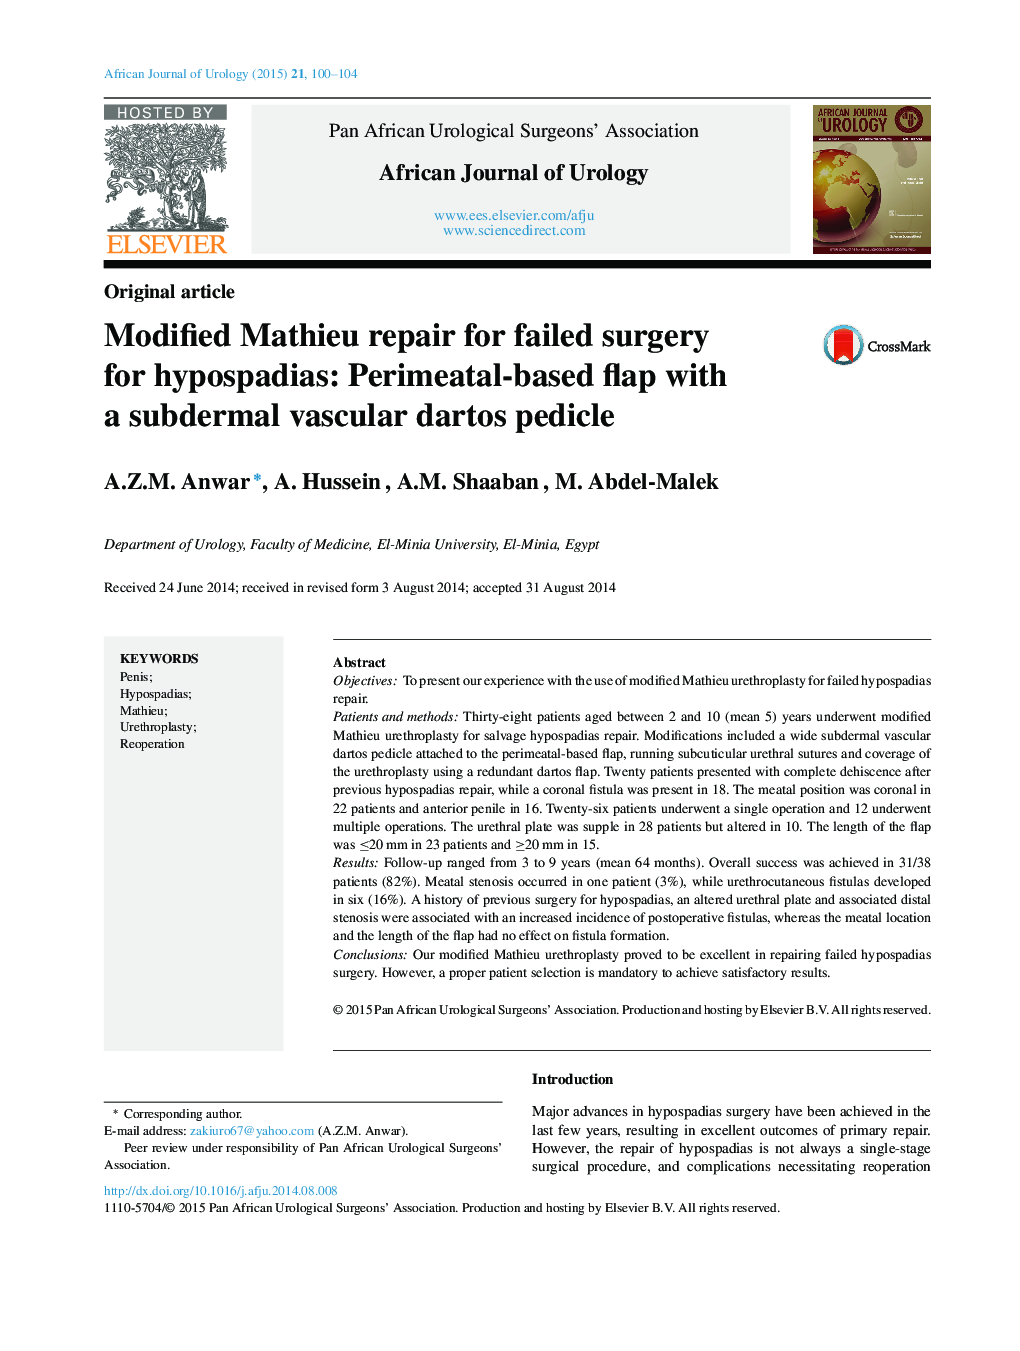 Modified Mathieu repair for failed surgery for hypospadias: Perimeatal-based flap with a subdermal vascular dartos pedicle 